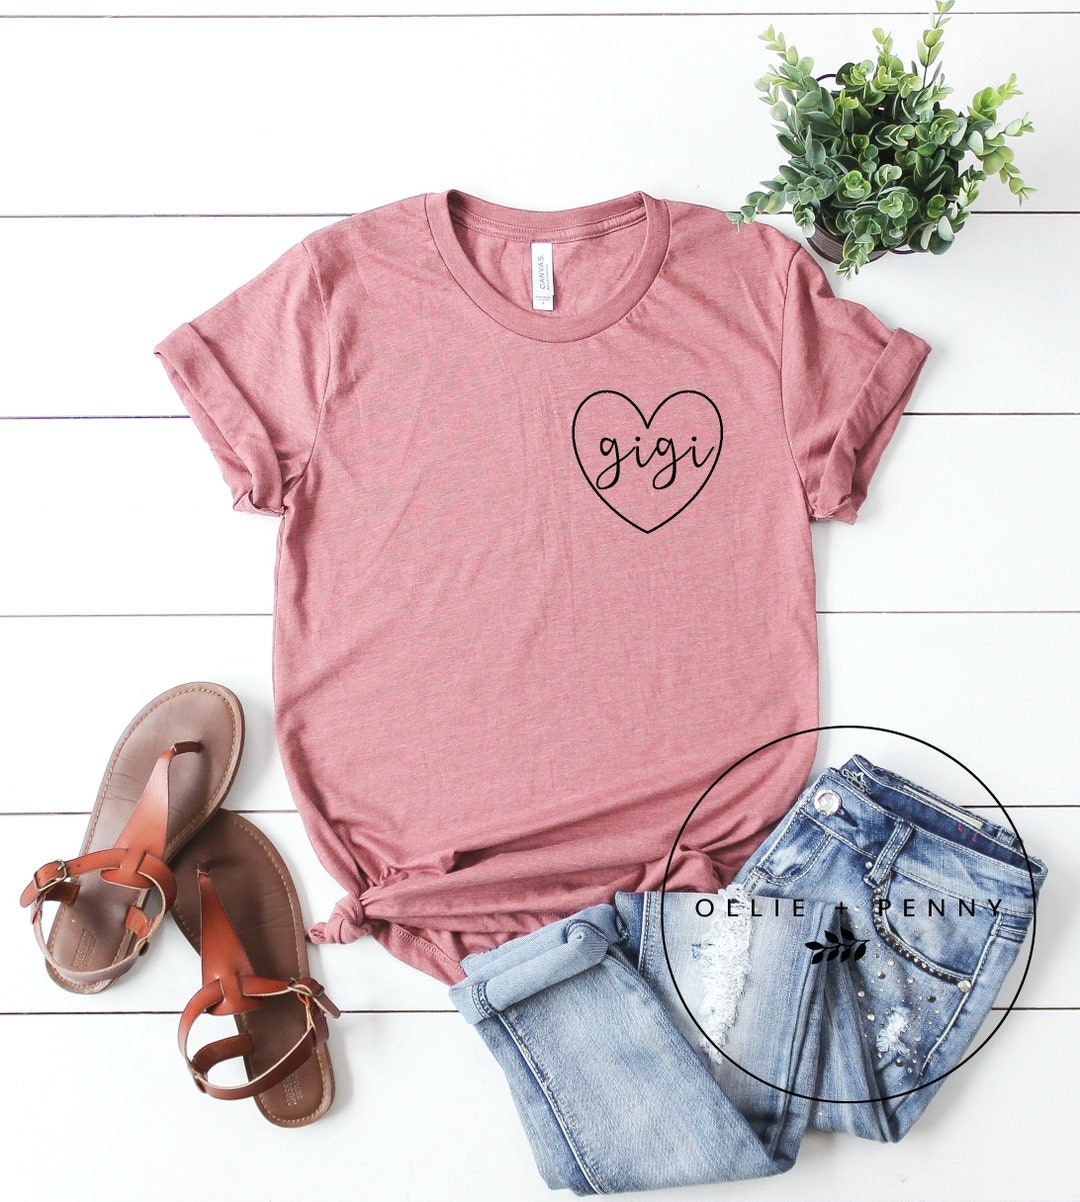 GIGI Heart Shirt Gigi Shirt Gigi Gift Pregnancy - Etsy